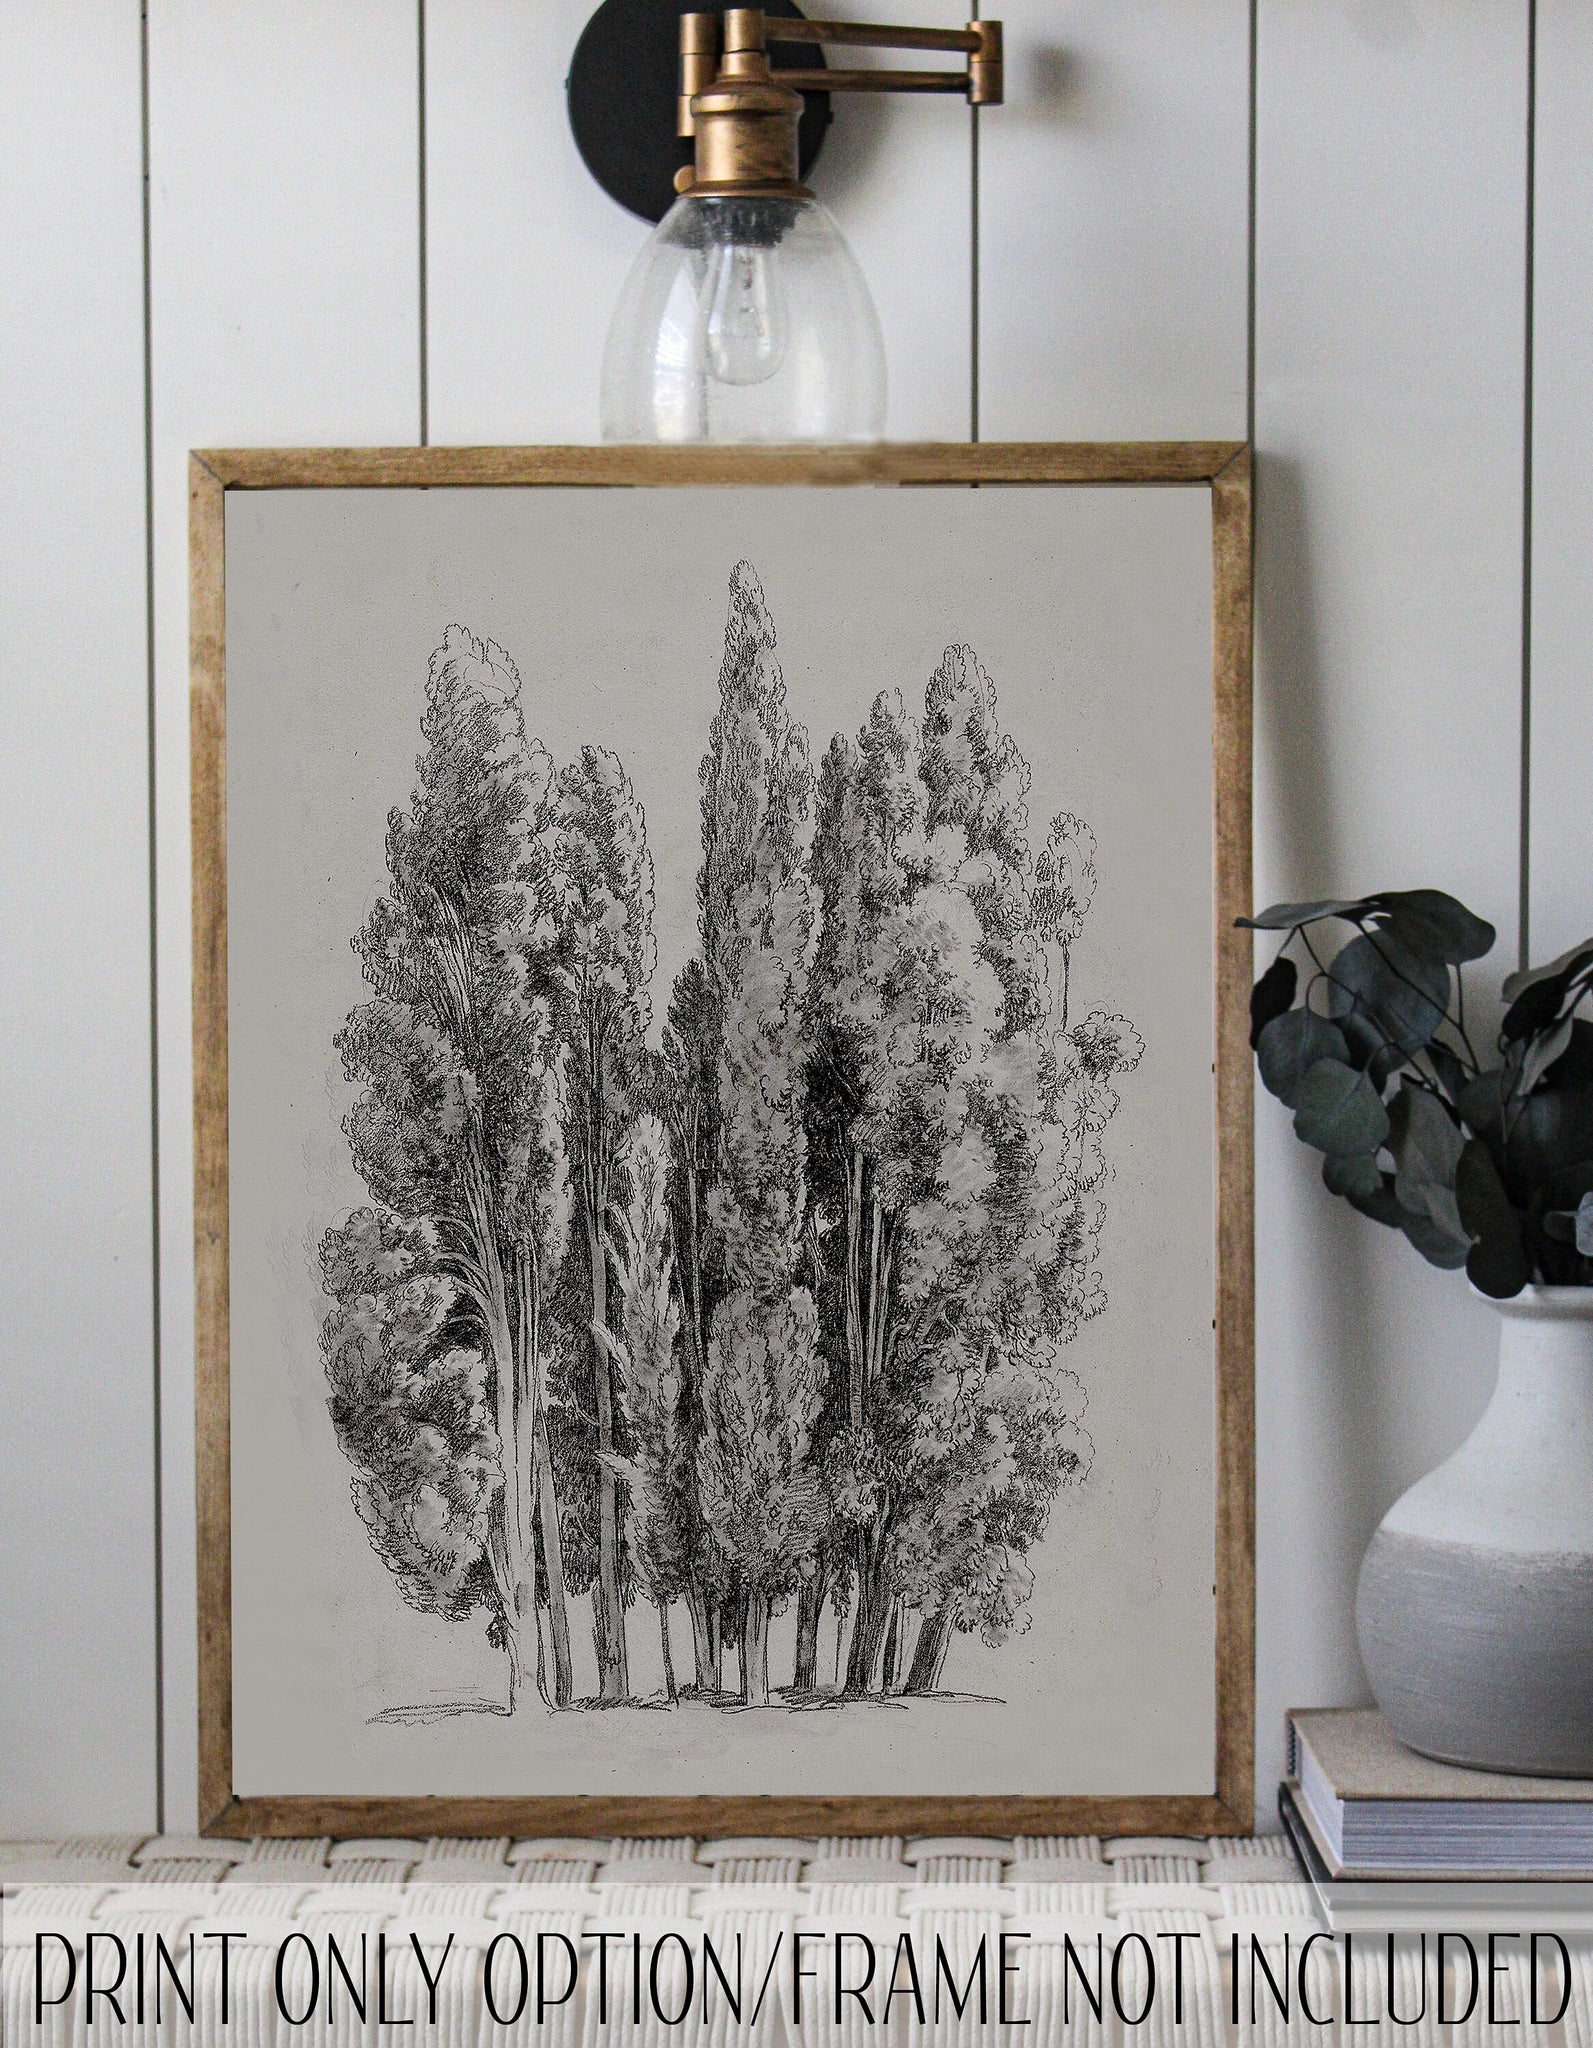 Vintage painting print/canvas art print/landscape/black and white sketch/tree sketch/home decor/canvas art/#135